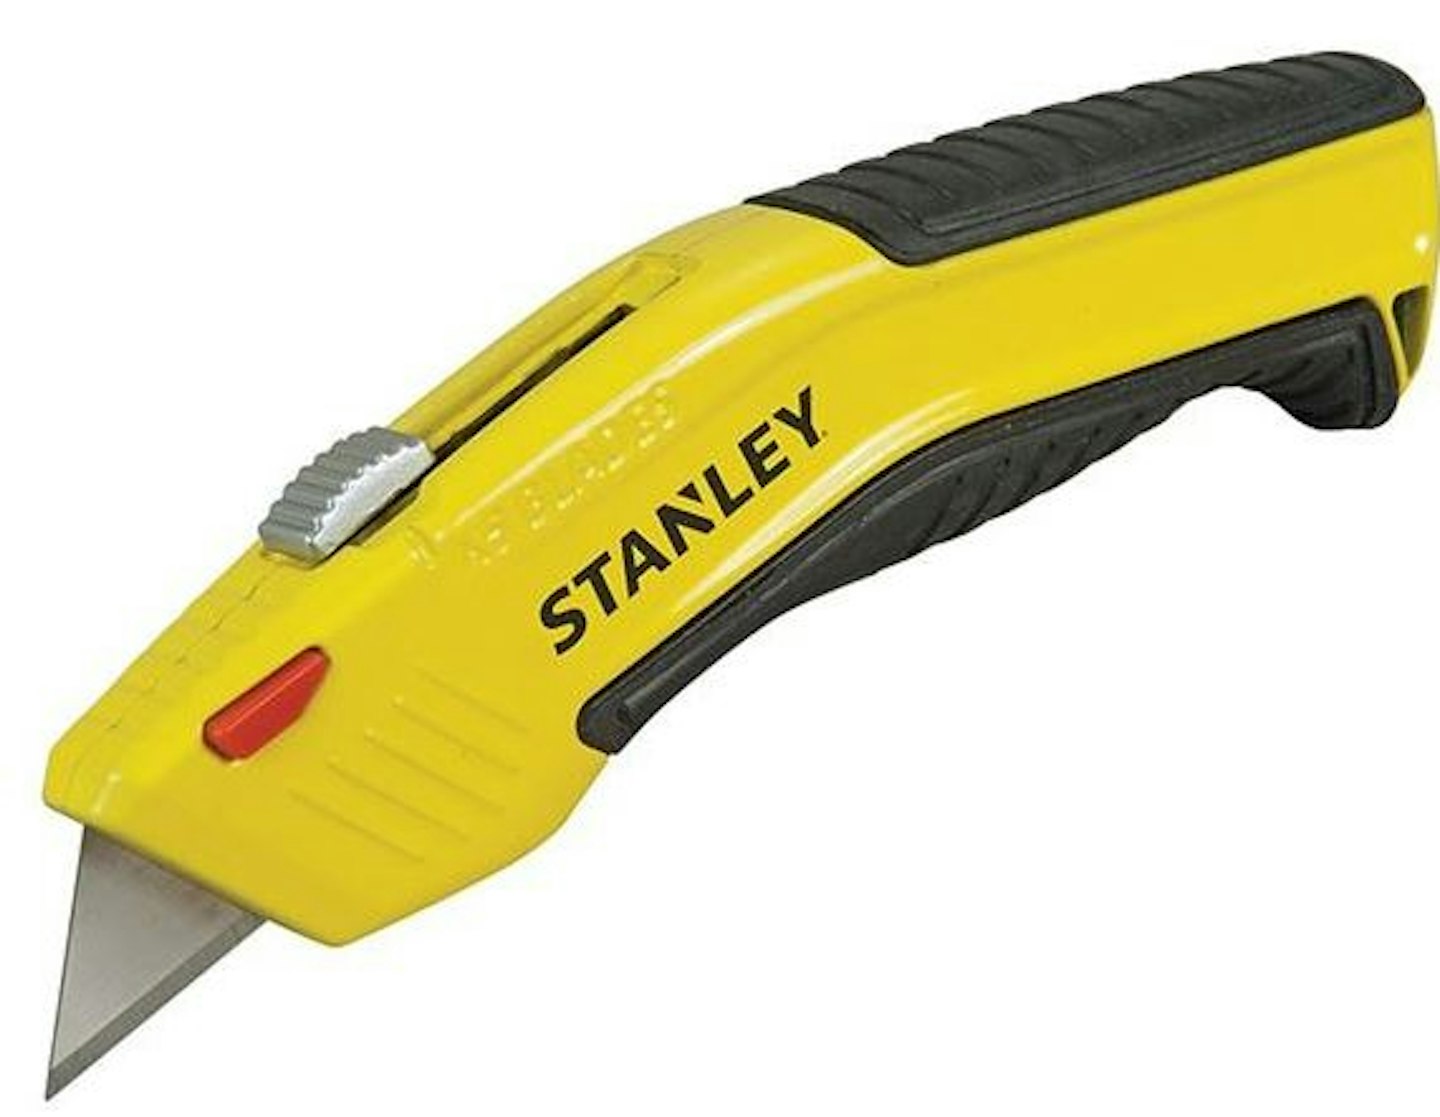 Stanley Knife